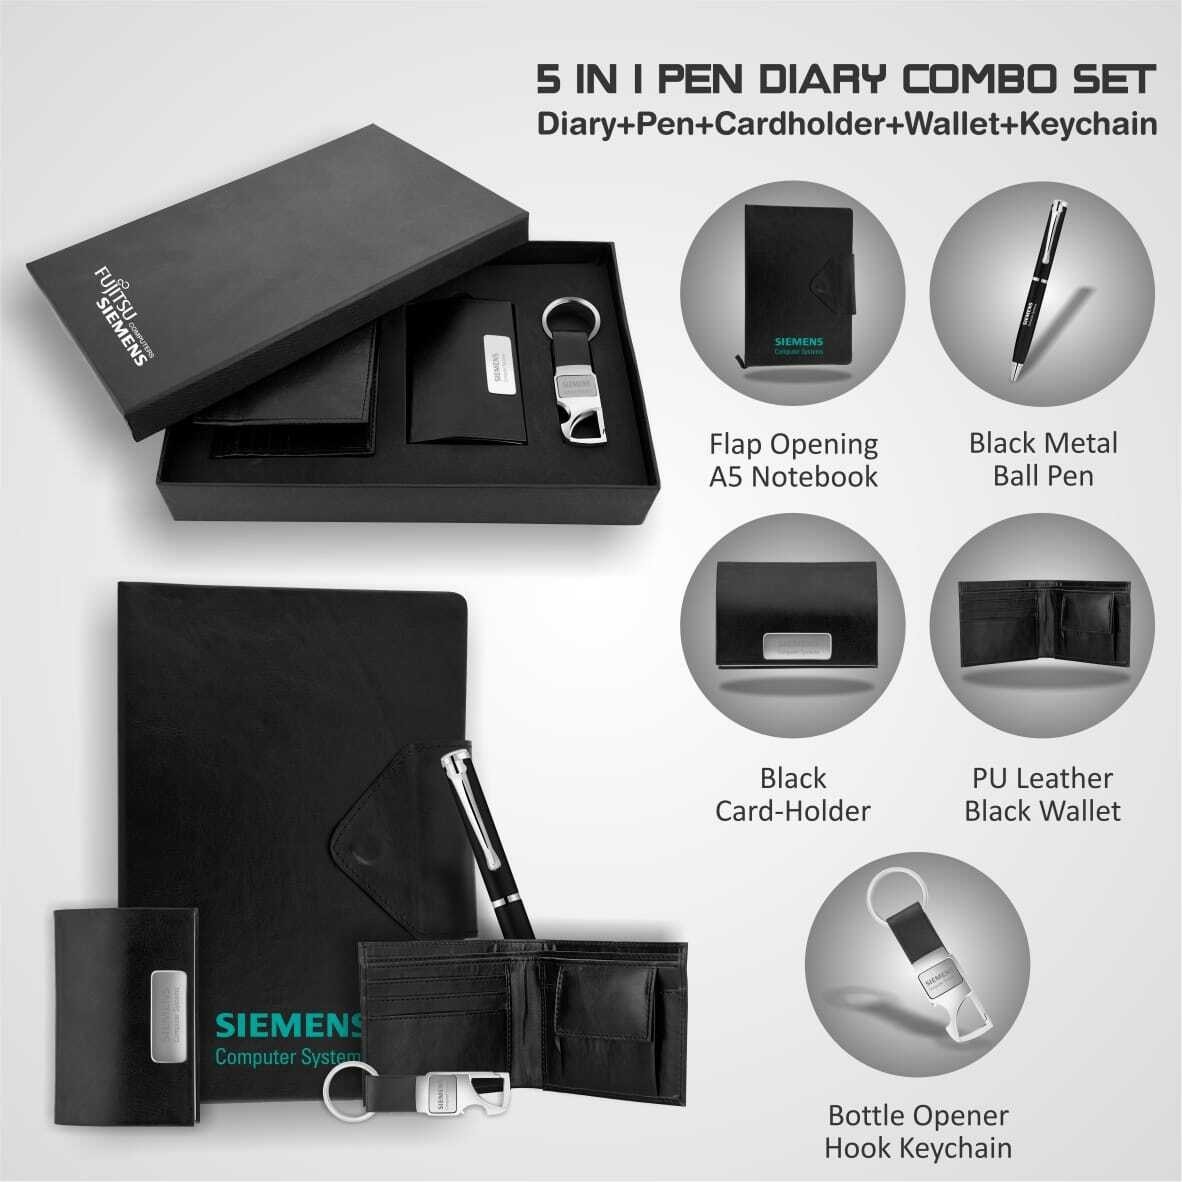 5 in 1 Pen Diary Combo Set : Diary, Pen, Cardholder, Wallet, Keychain.